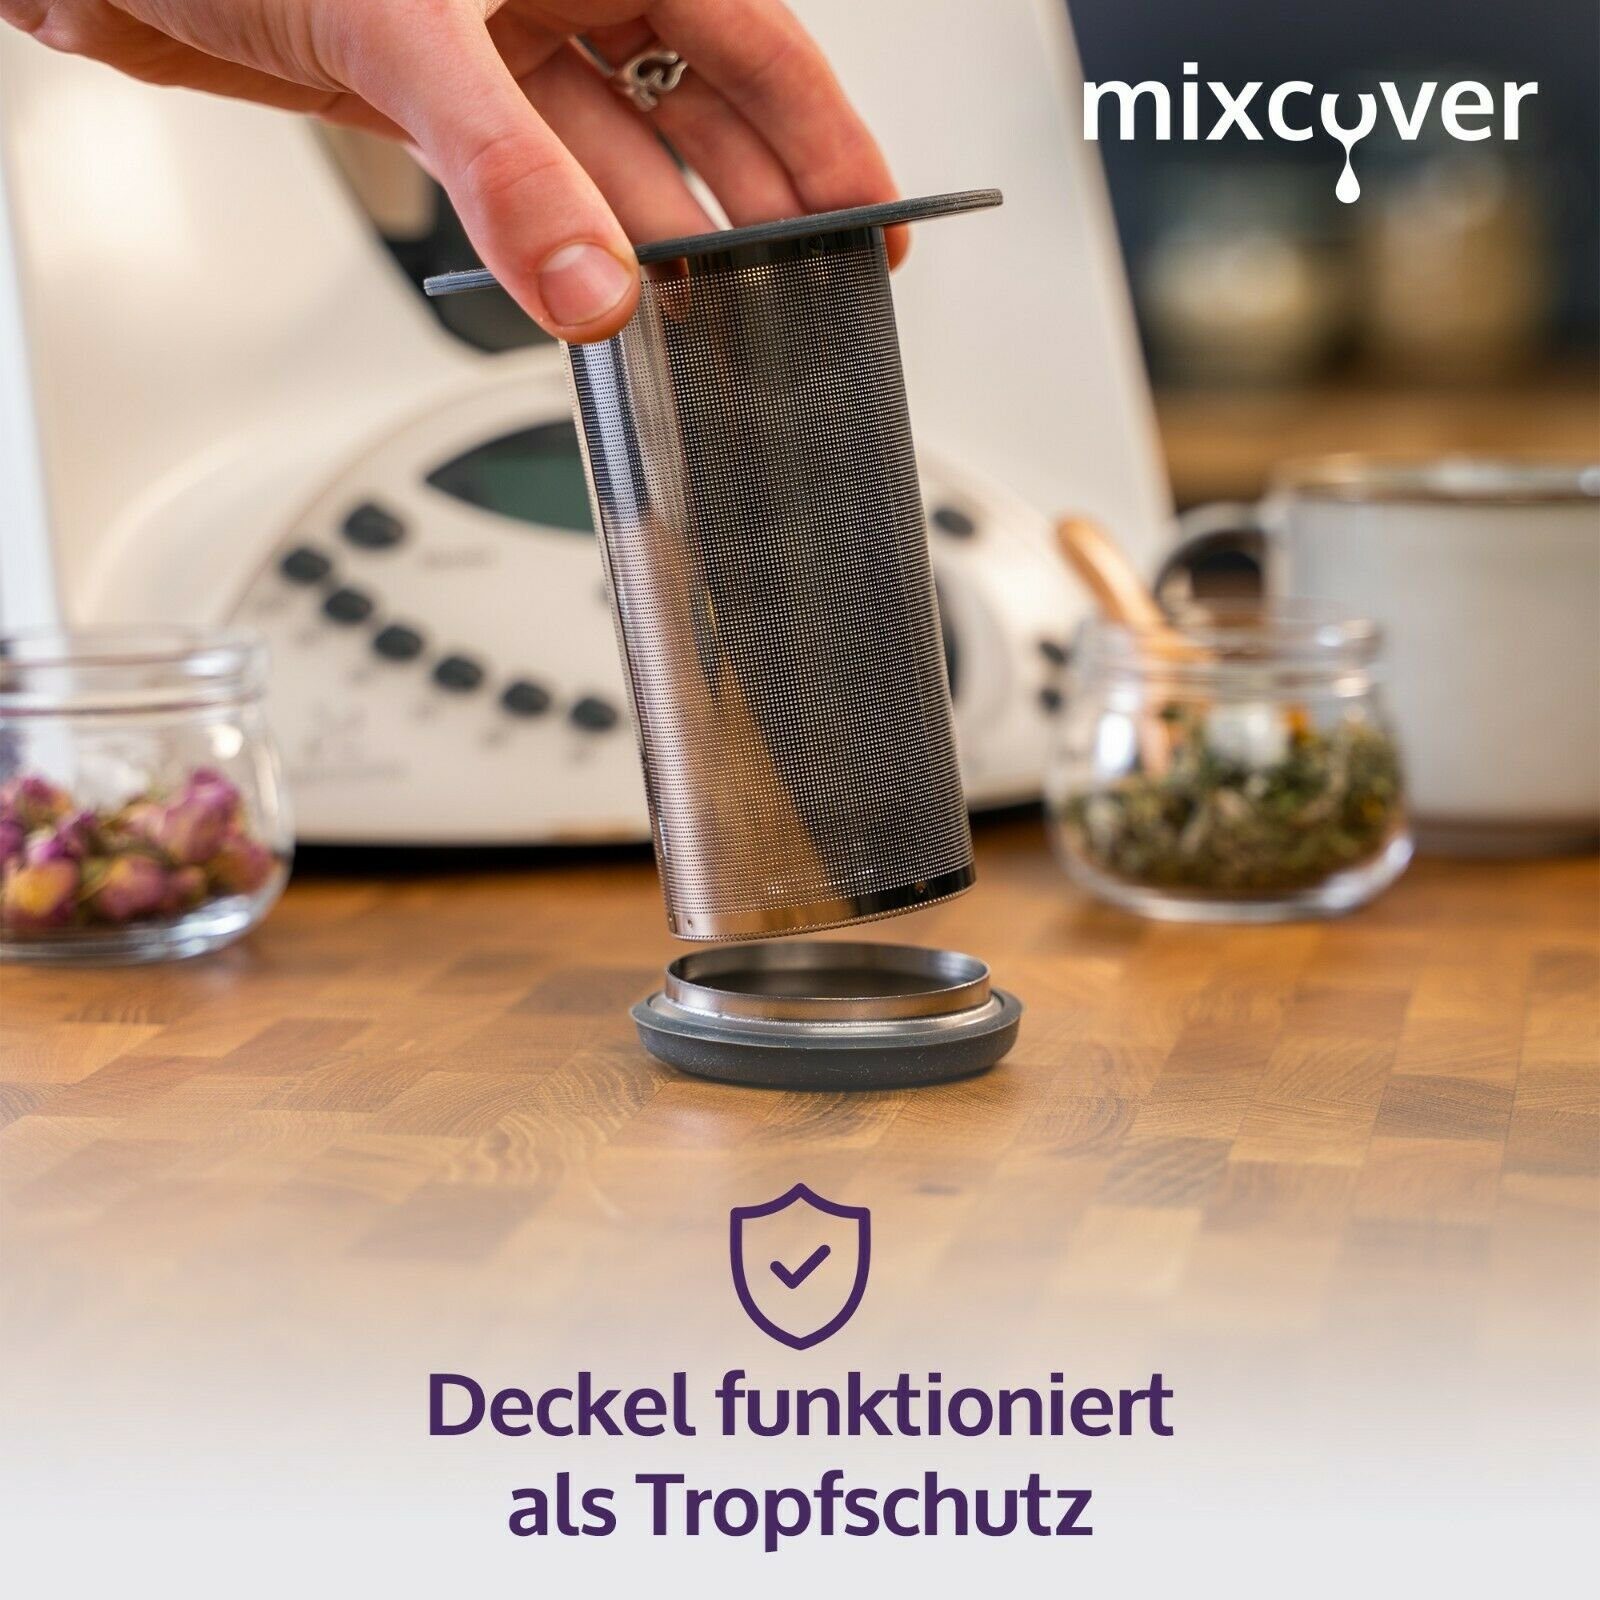 TM31 Mixcover mixcover Küchenmaschinen-Adapter für Teefilter Thermomix